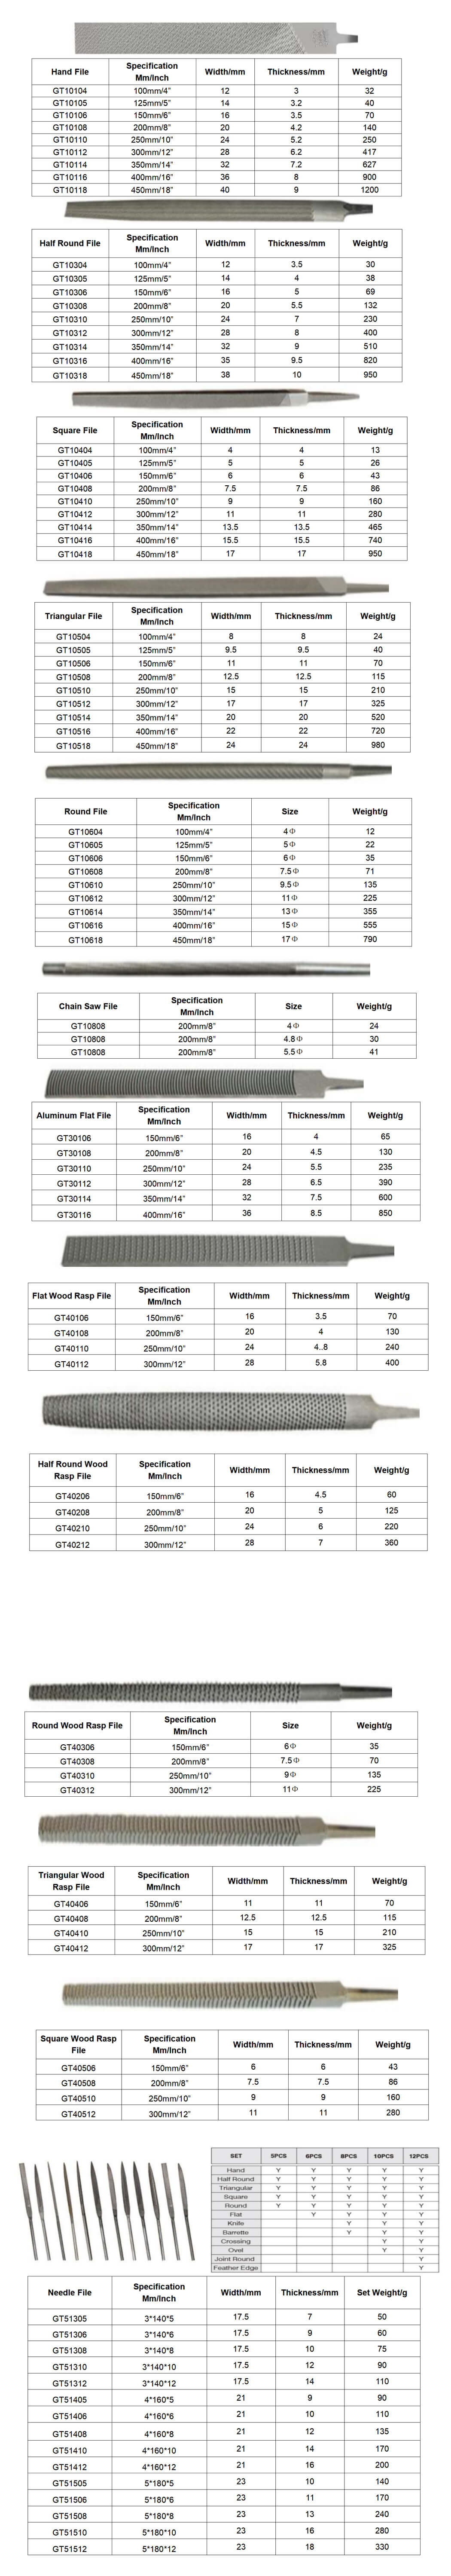 Steel-File-Tool-For-Metal-Abrasive-Tool-Dimensions